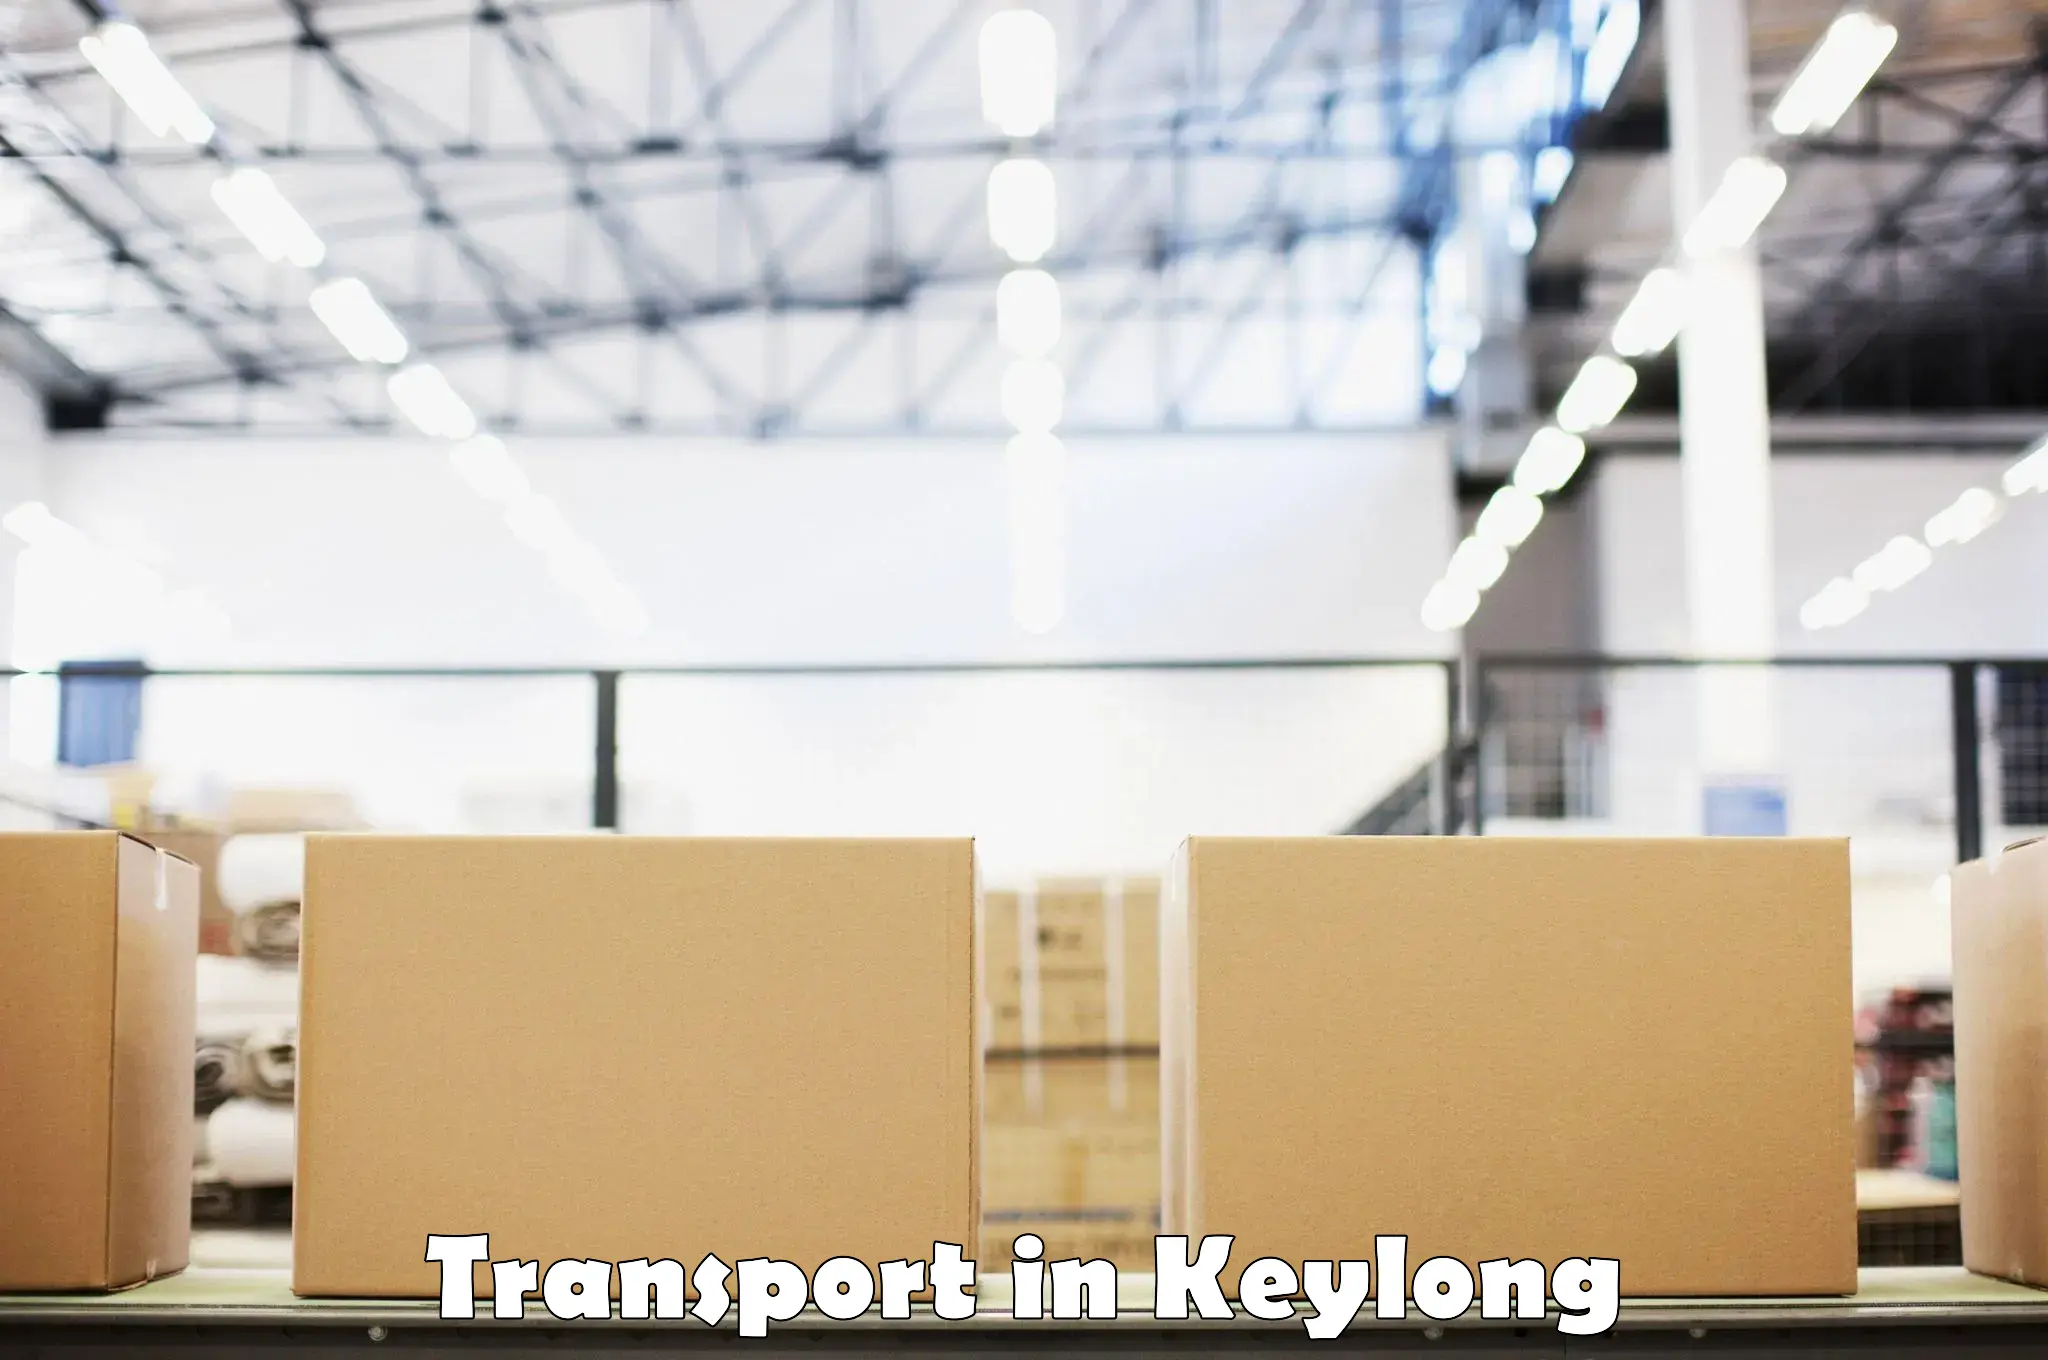 Furniture transport service in Keylong